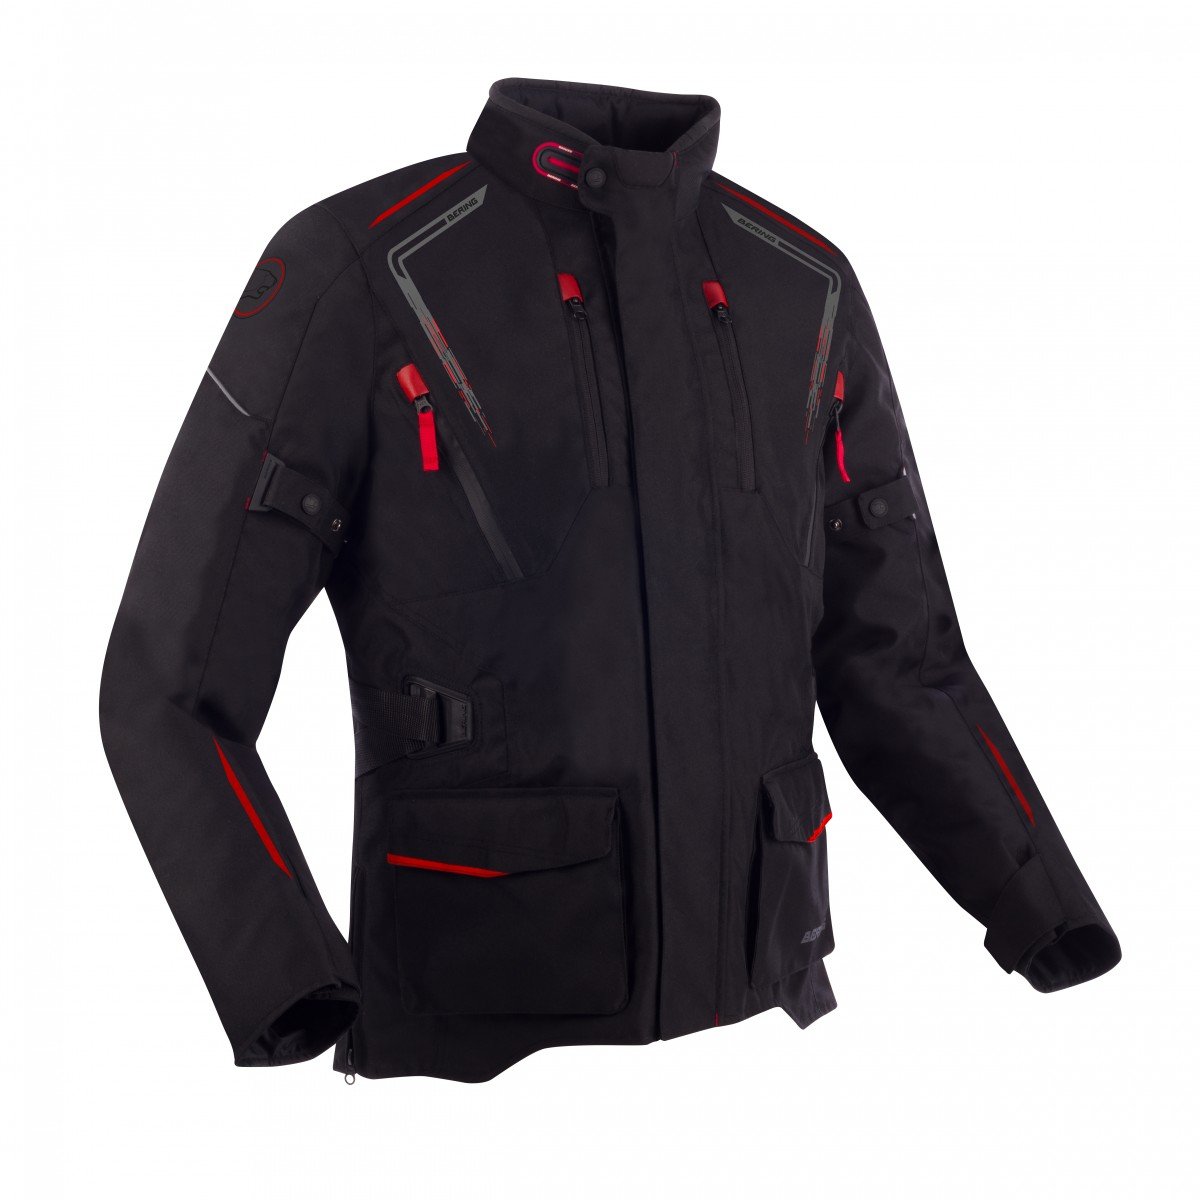 Image of Bering Vision Jacket Black Size XL ID 3660815169704